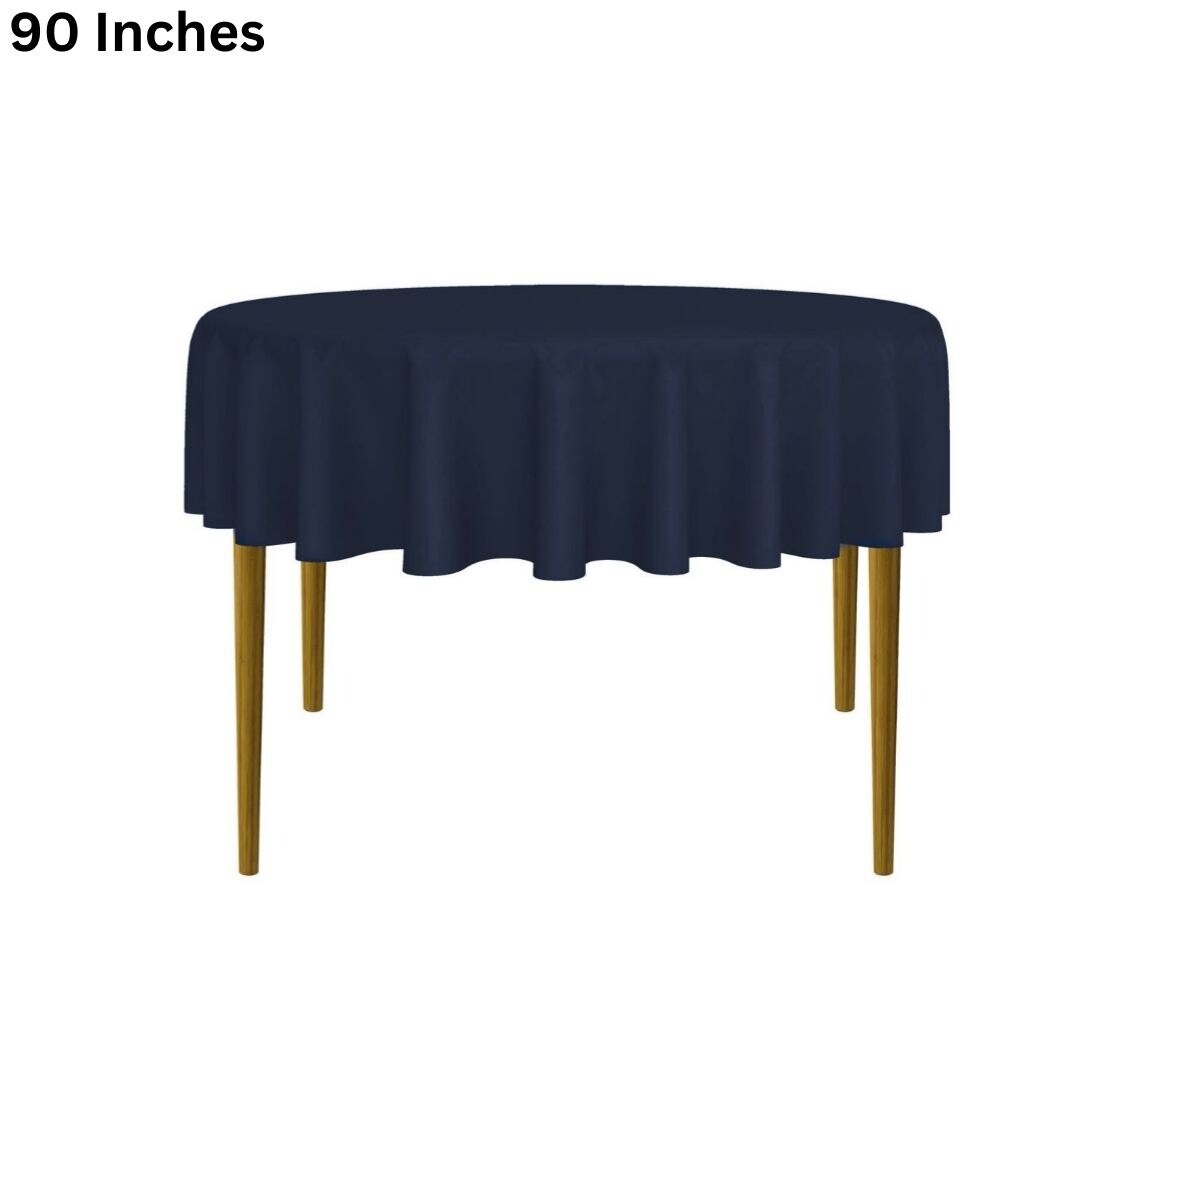 90 Inches Elegant Fabric Tablecloth